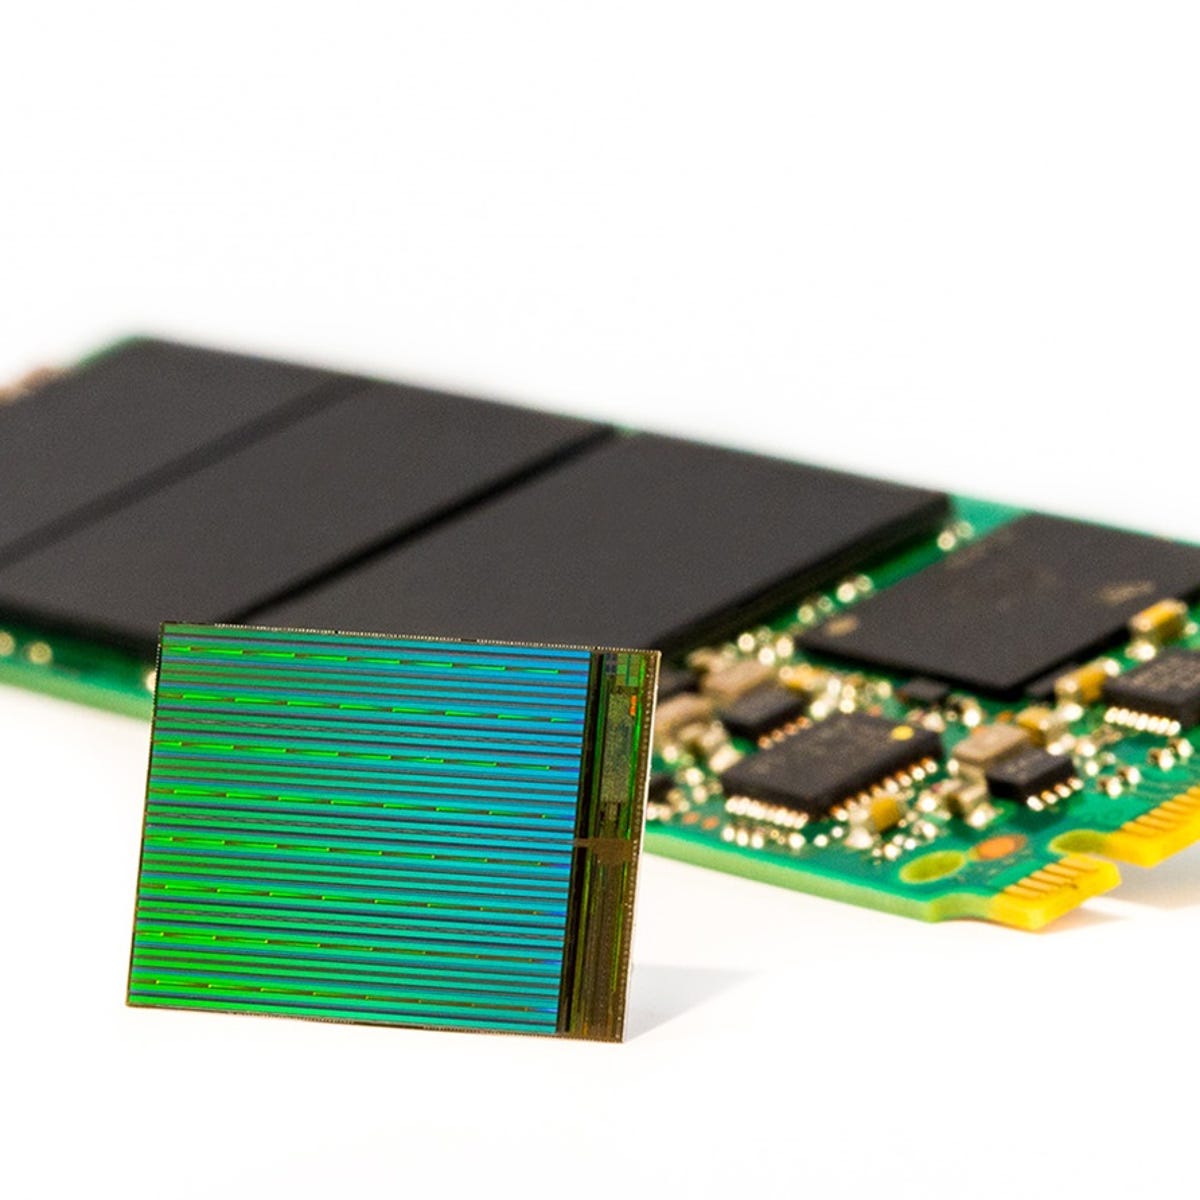 NAND память. Первый чип с флеш памятью. Чипы памяти Hynix. Максимальная память ssd